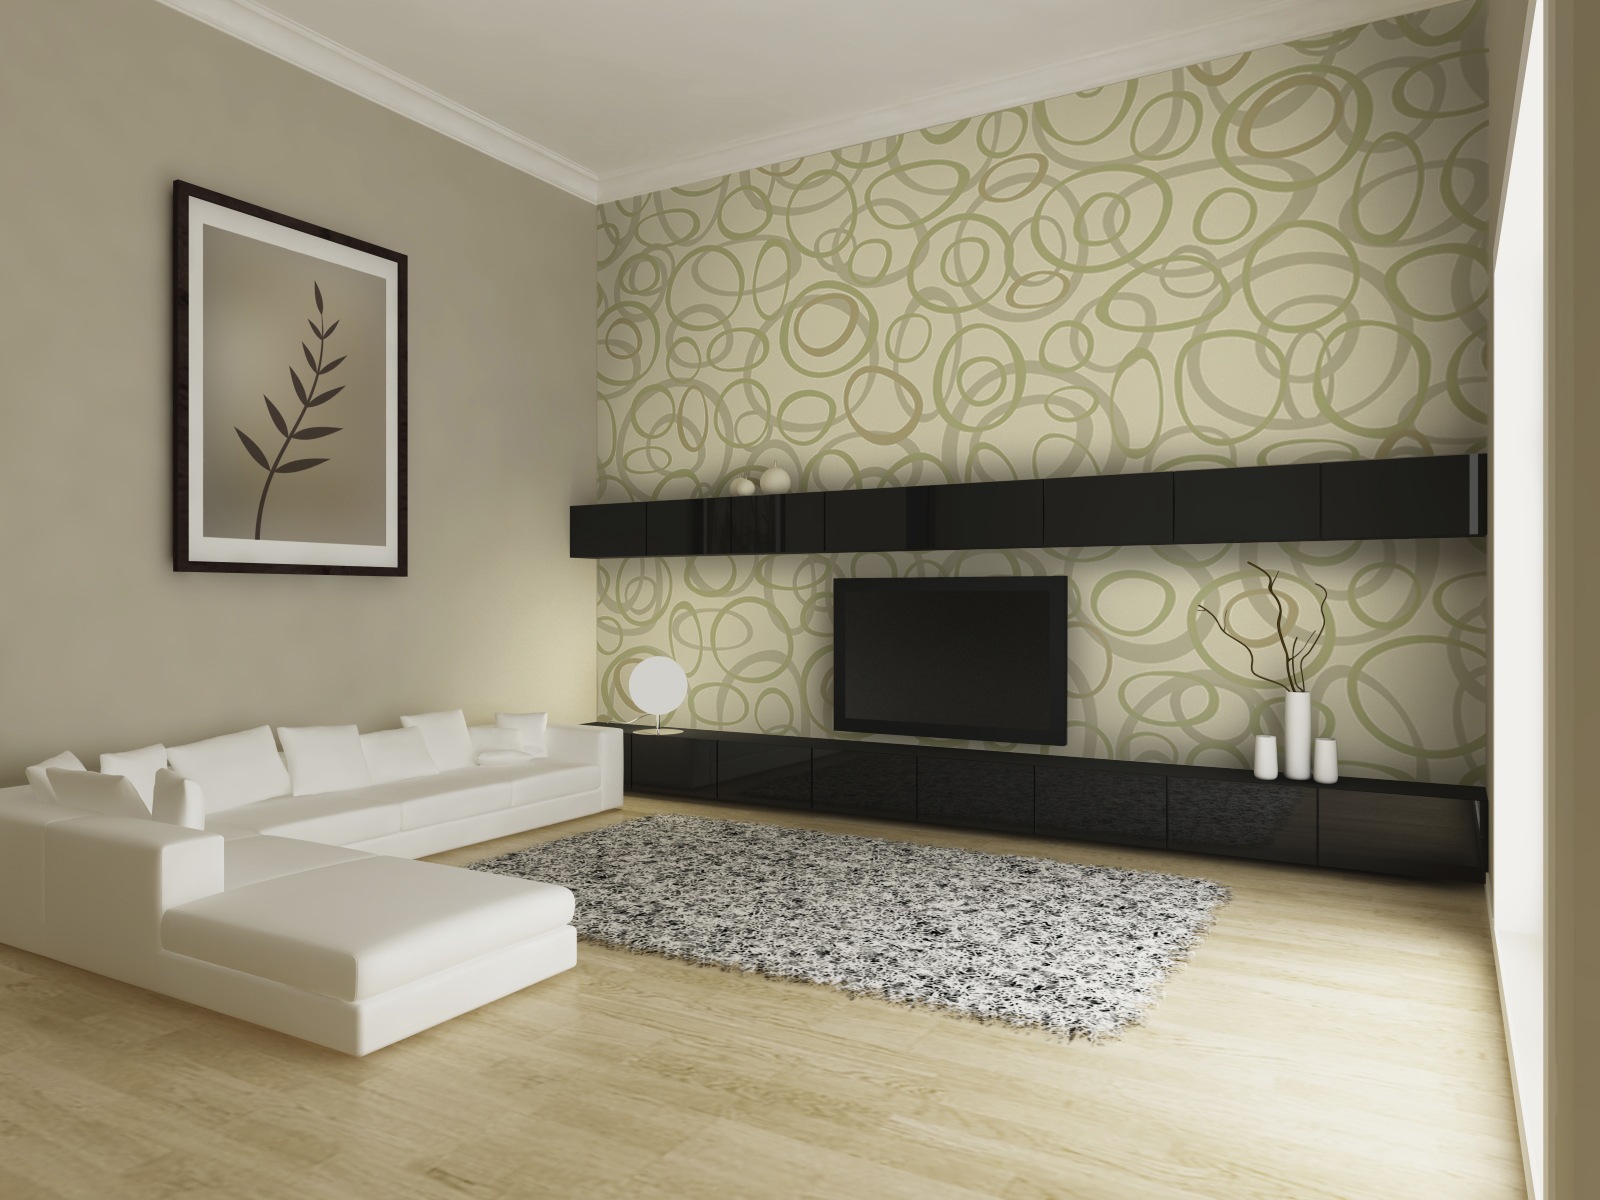 wallpaper interior design photo - 2